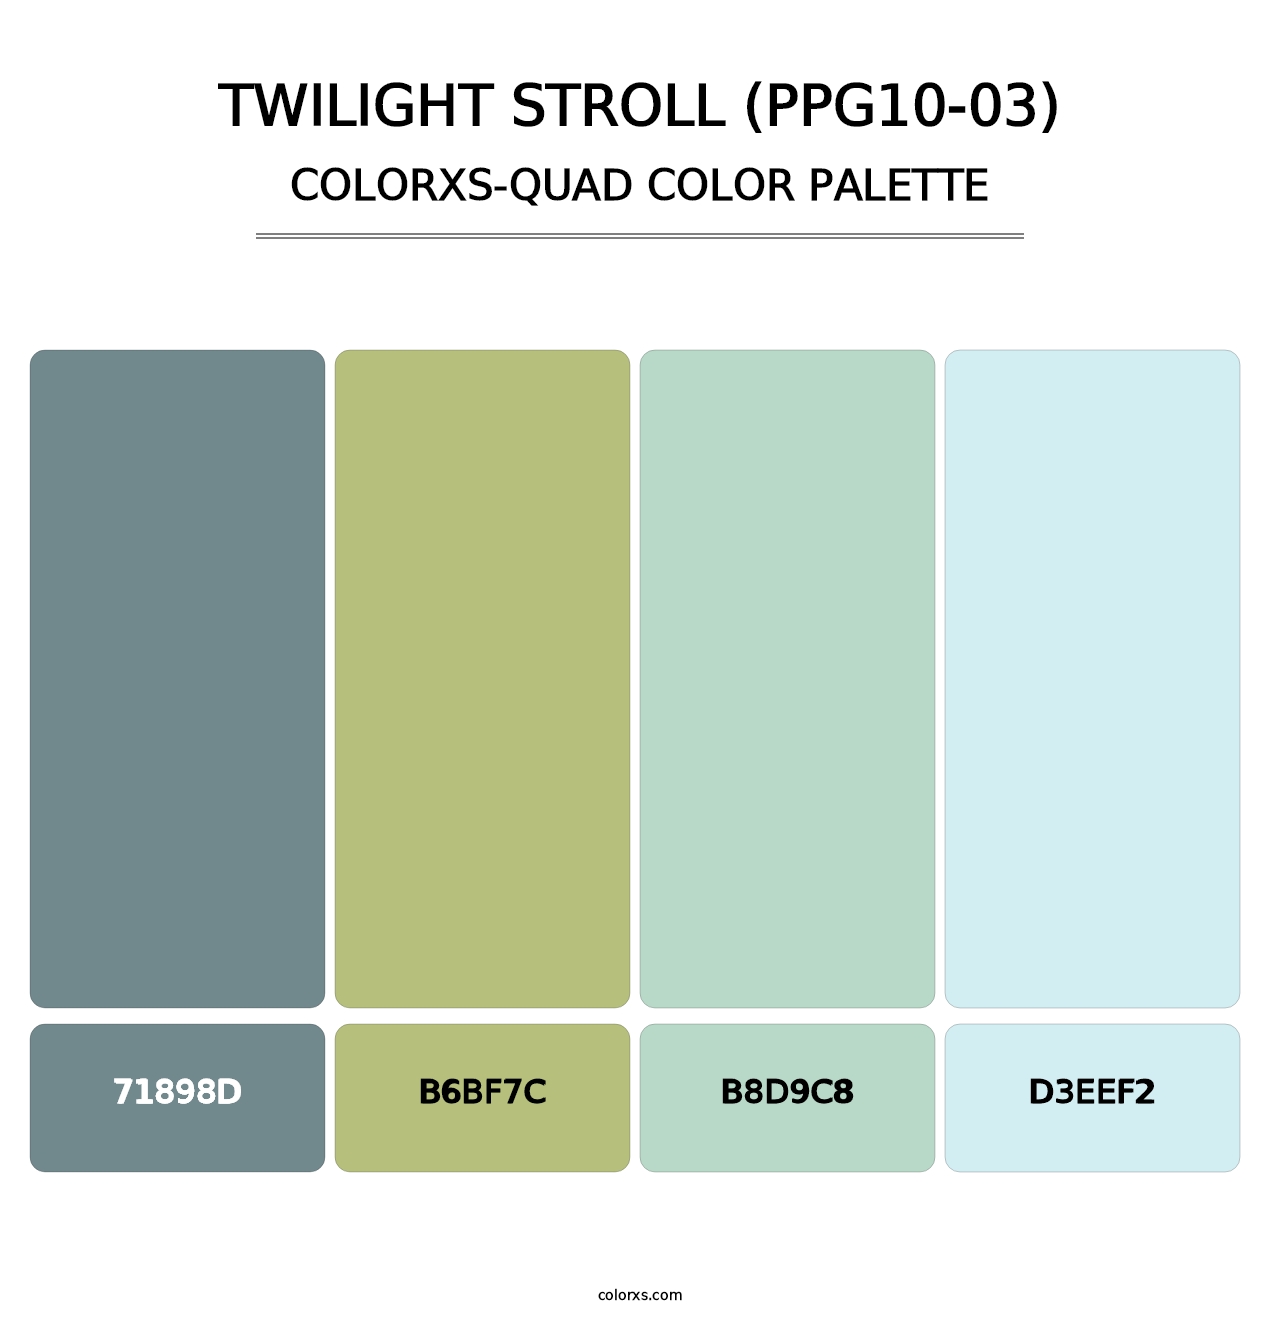 Twilight Stroll (PPG10-03) - Colorxs Quad Palette